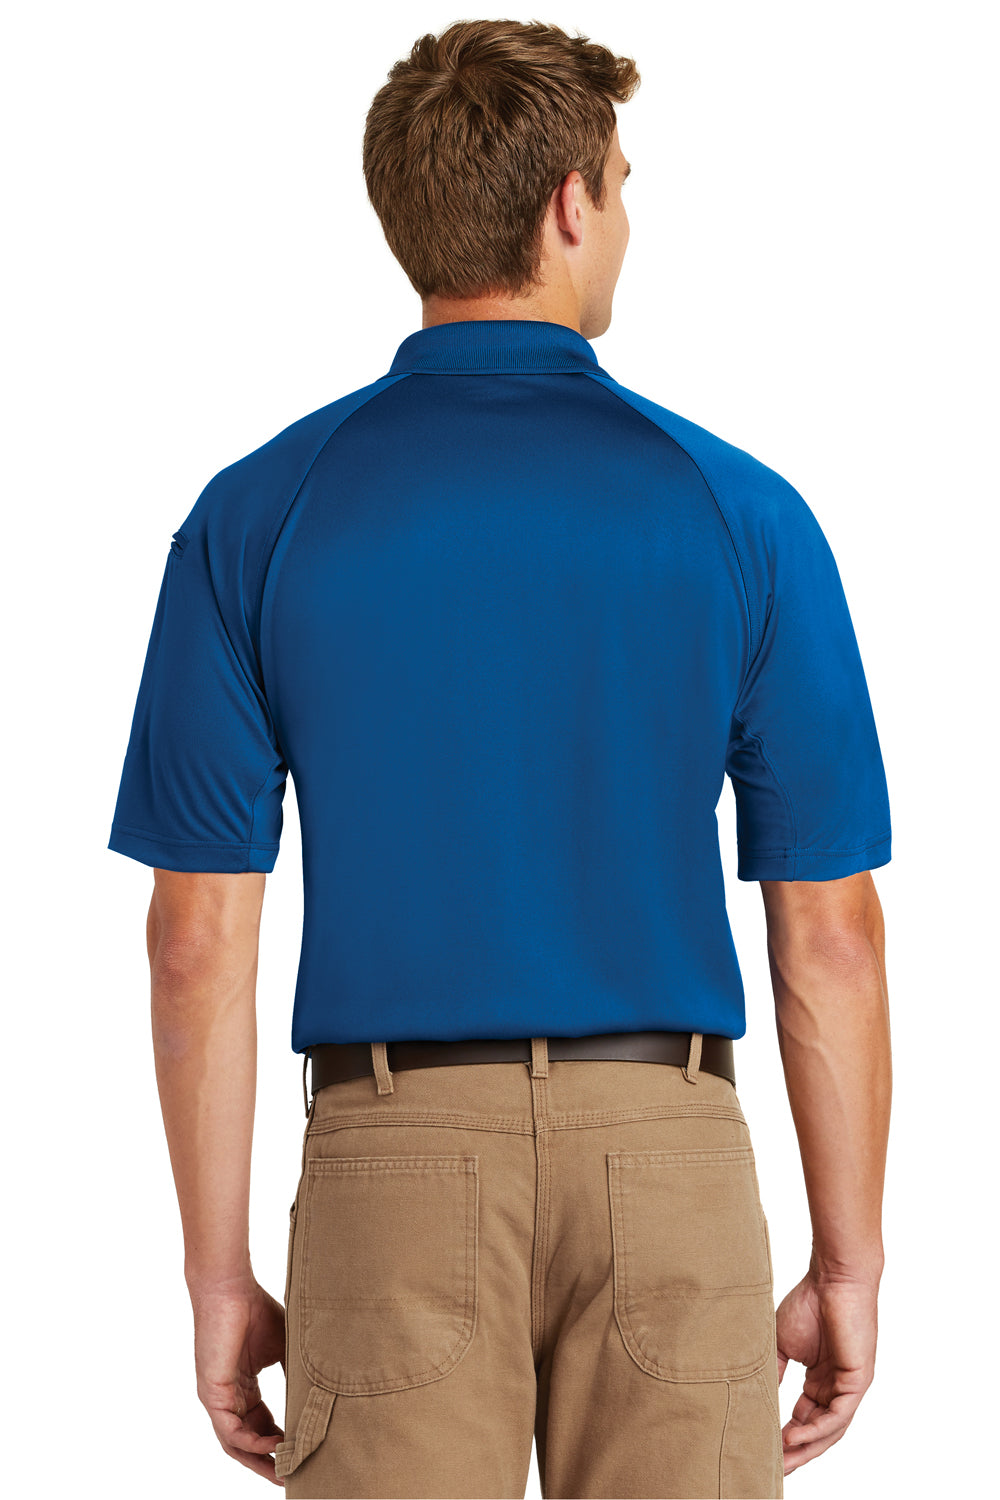 CornerStone CS410 Mens Select Tactical Moisture Wicking Short Sleeve Polo Shirt Royal Blue Back